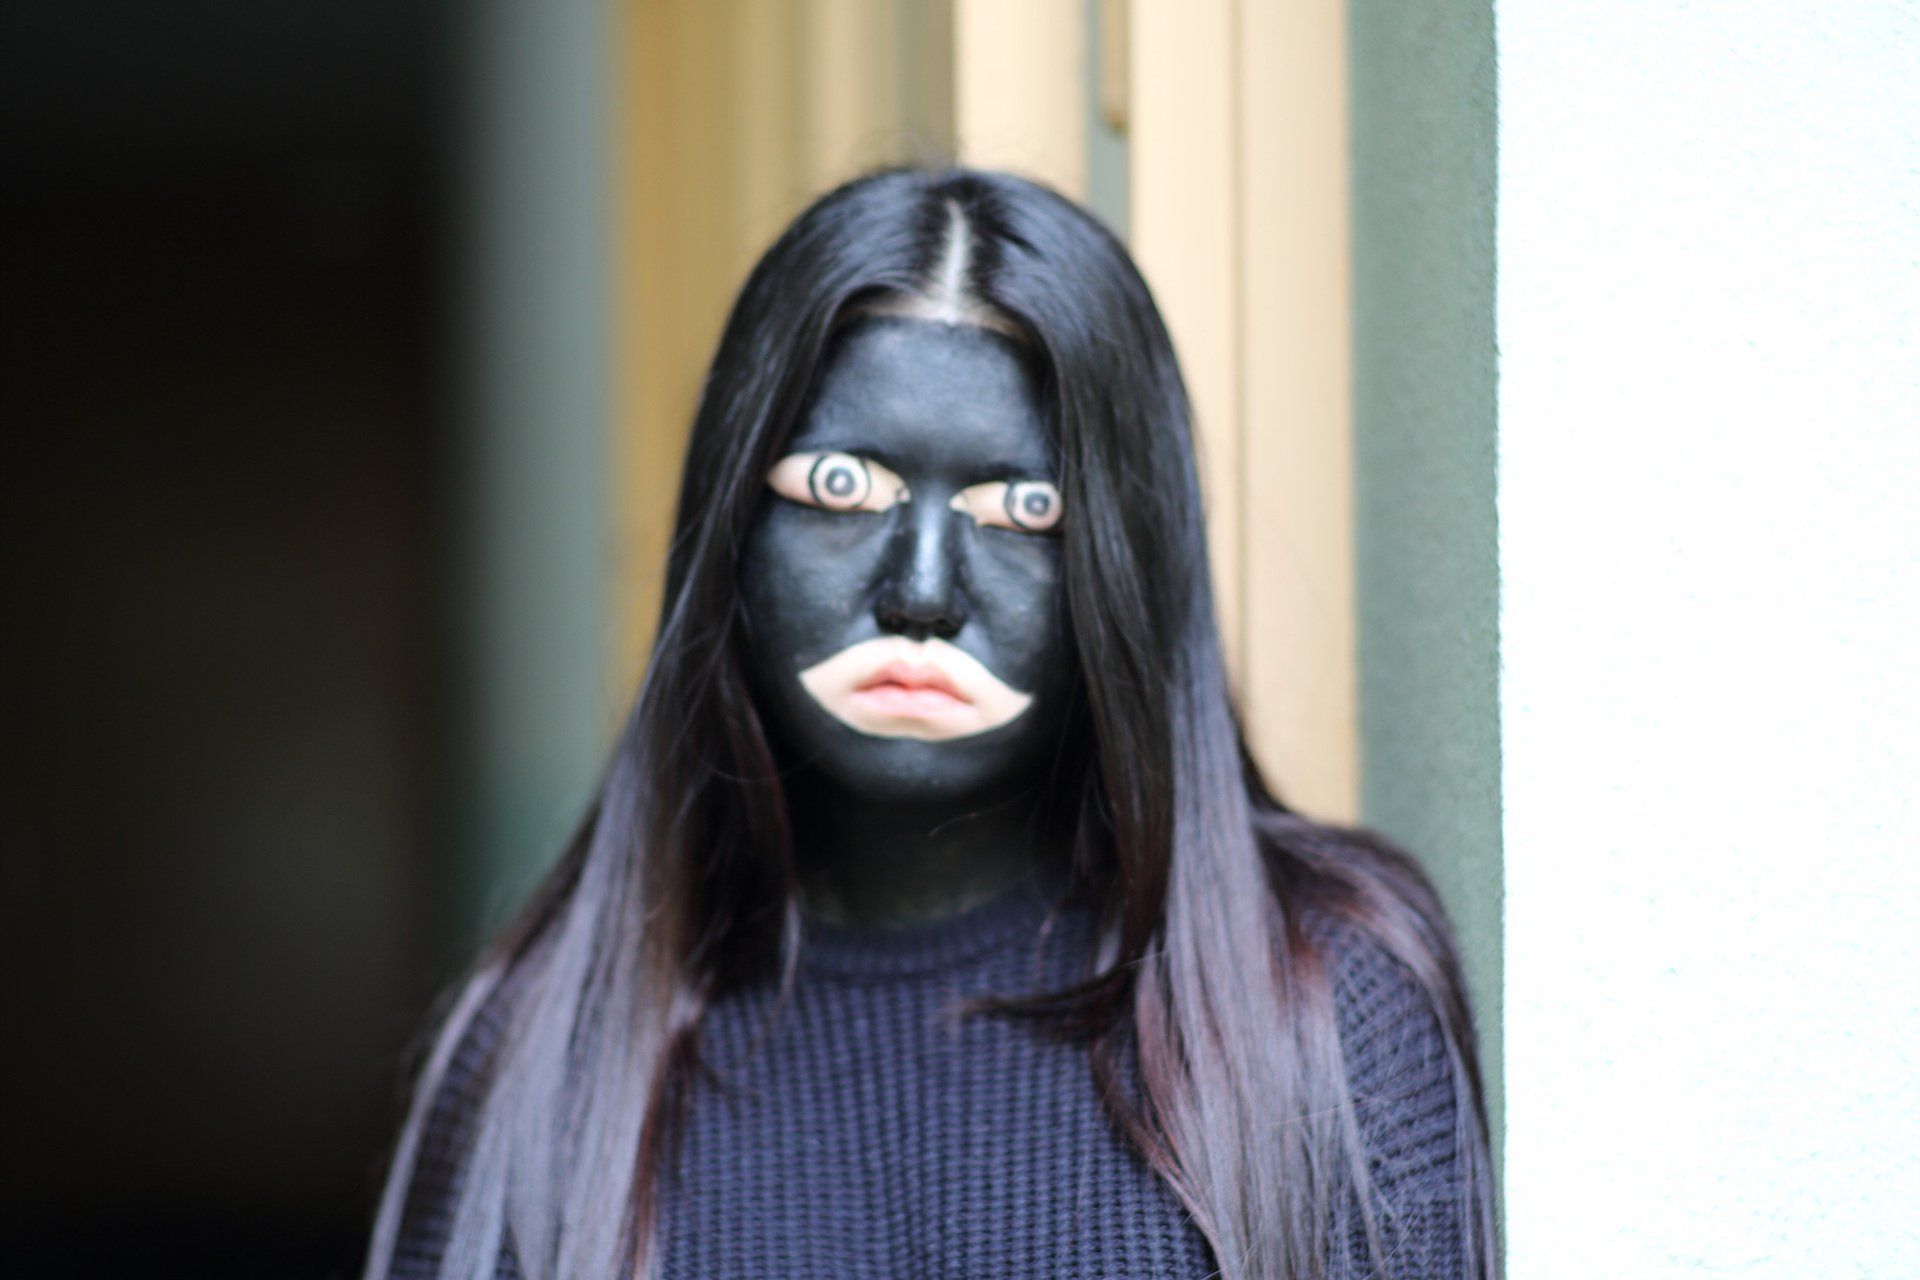 „The Mask No. 3“ by Sebastian Bieniek (B1EN1EK), 2015. Edition of 9 original photographs. 67 cm. x 100 cm. From „The Mask“ series. Oeuvre of BieniekFace (Bieniek-Face).